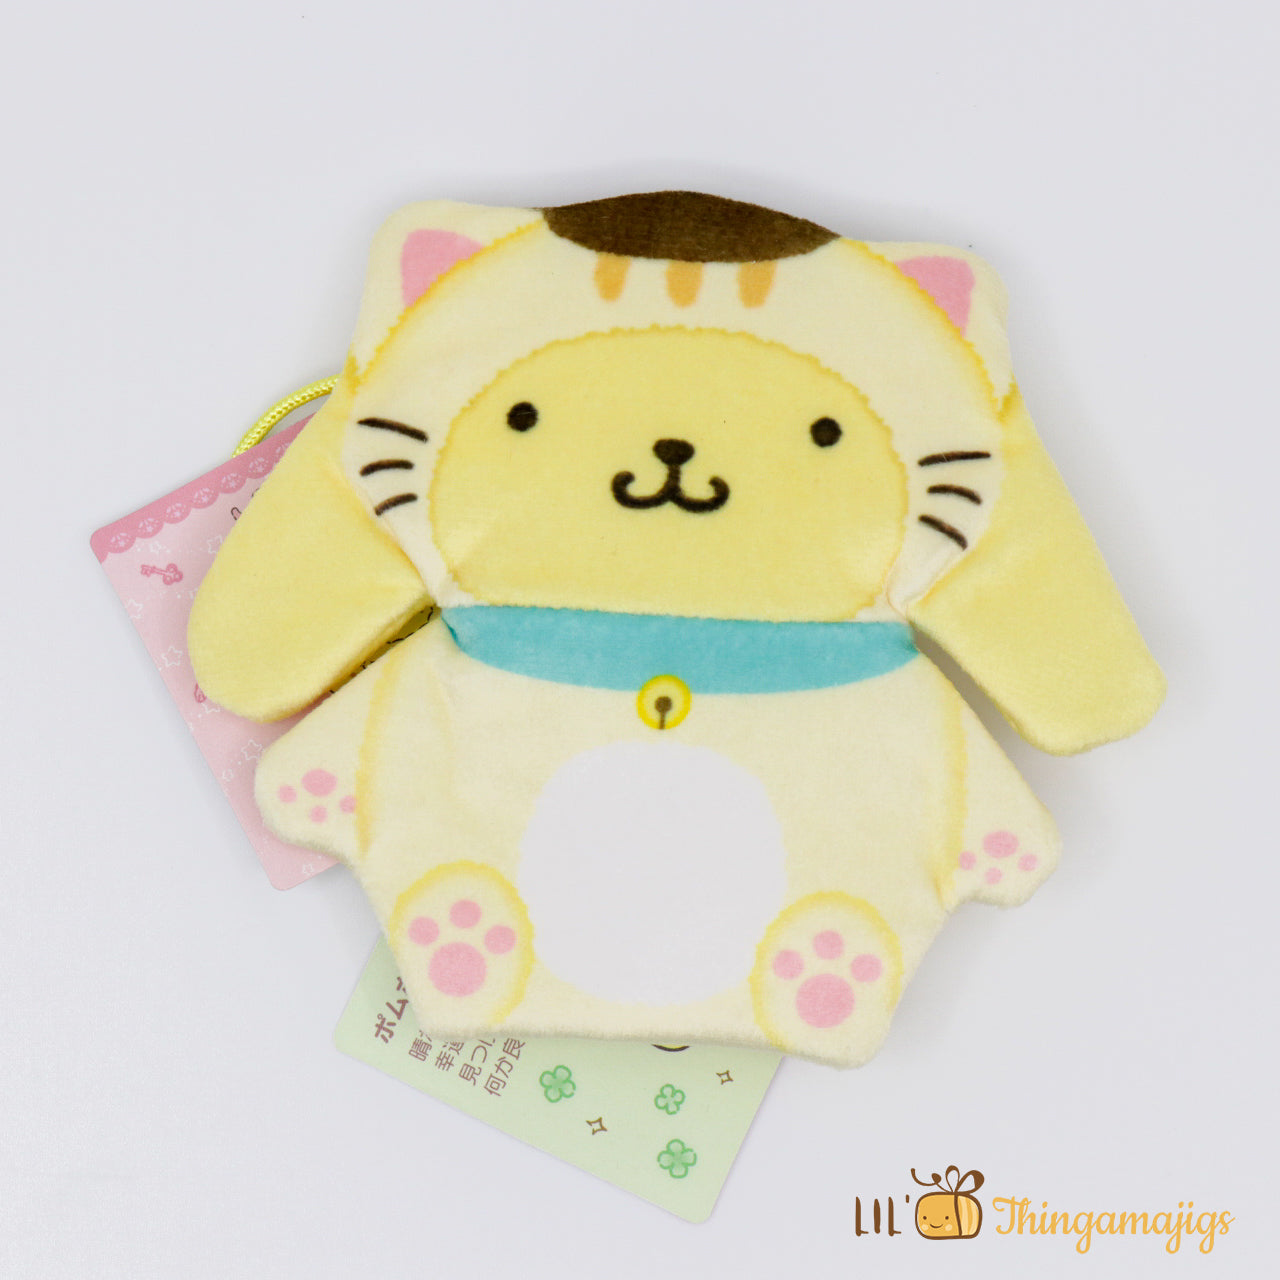 Sanrio Pompompurin Kitty Costum Coin Pouch 4.5" (Sanrio Japan Original)